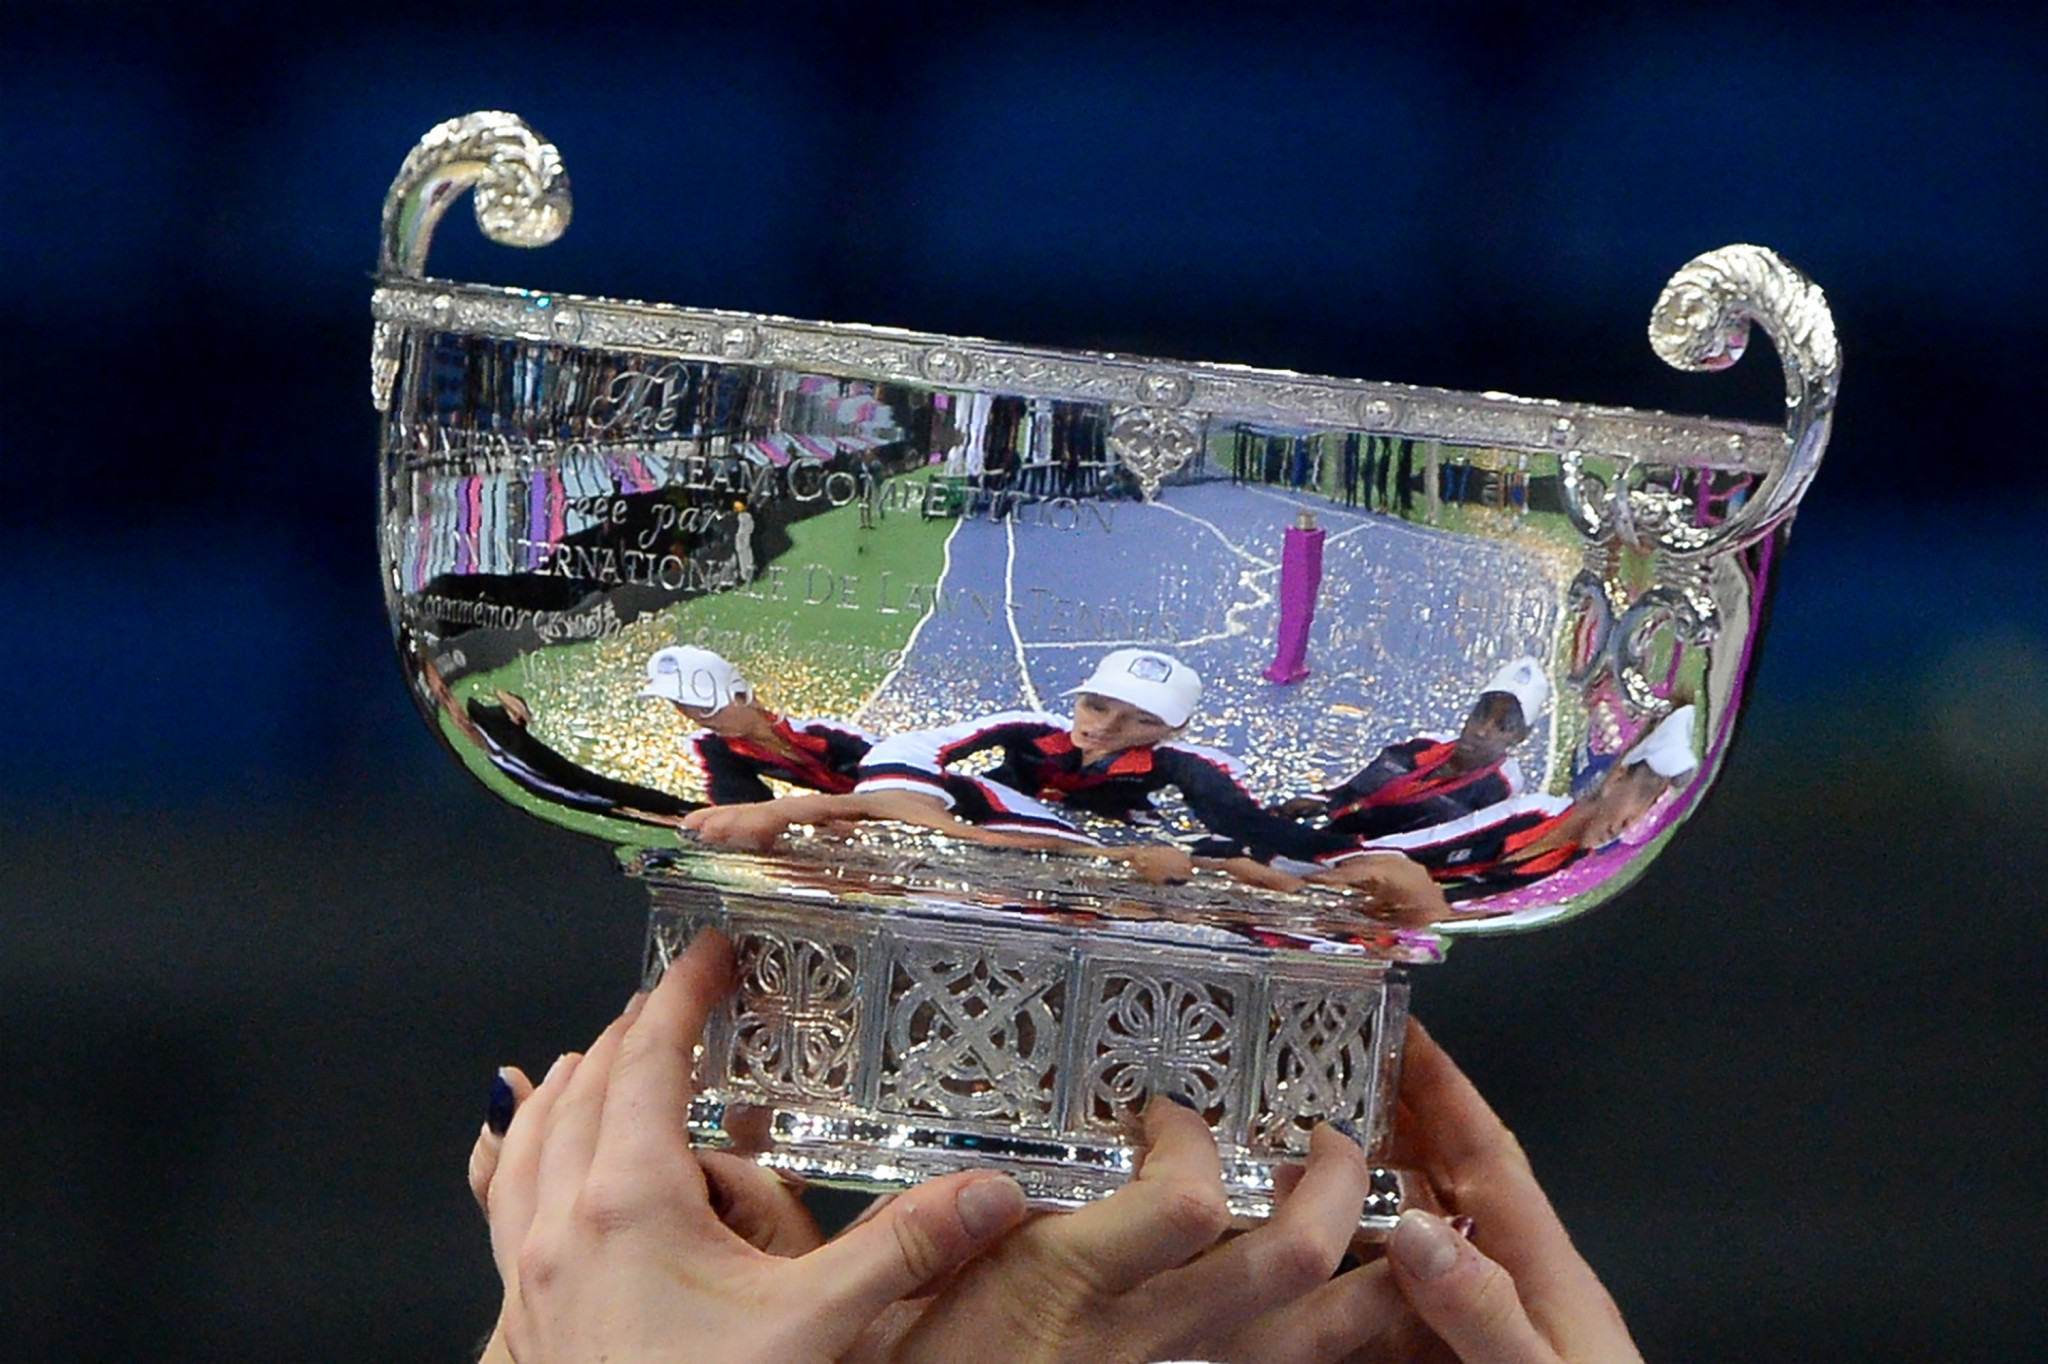 Glasgow to host 2022 Billie Jean King Cup Finals